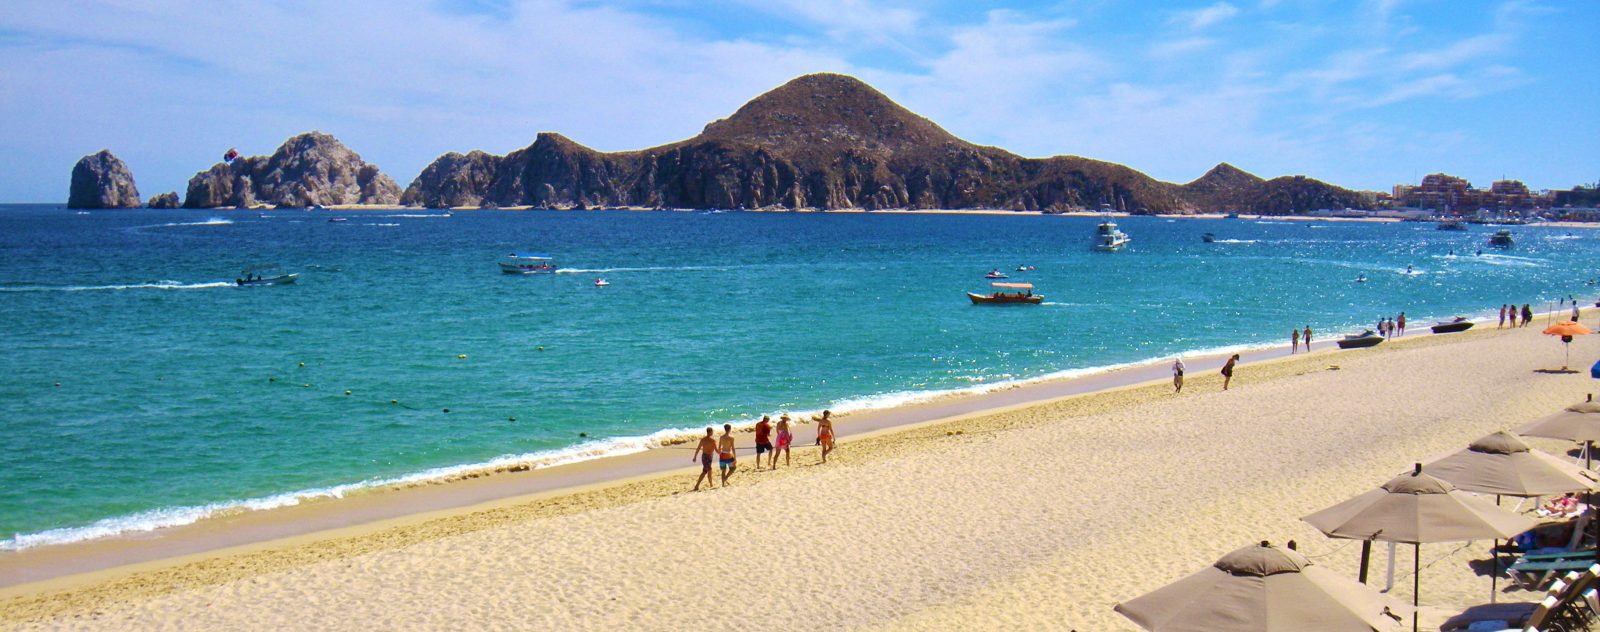 Cabo Water Activities: Swim or Not to Swim